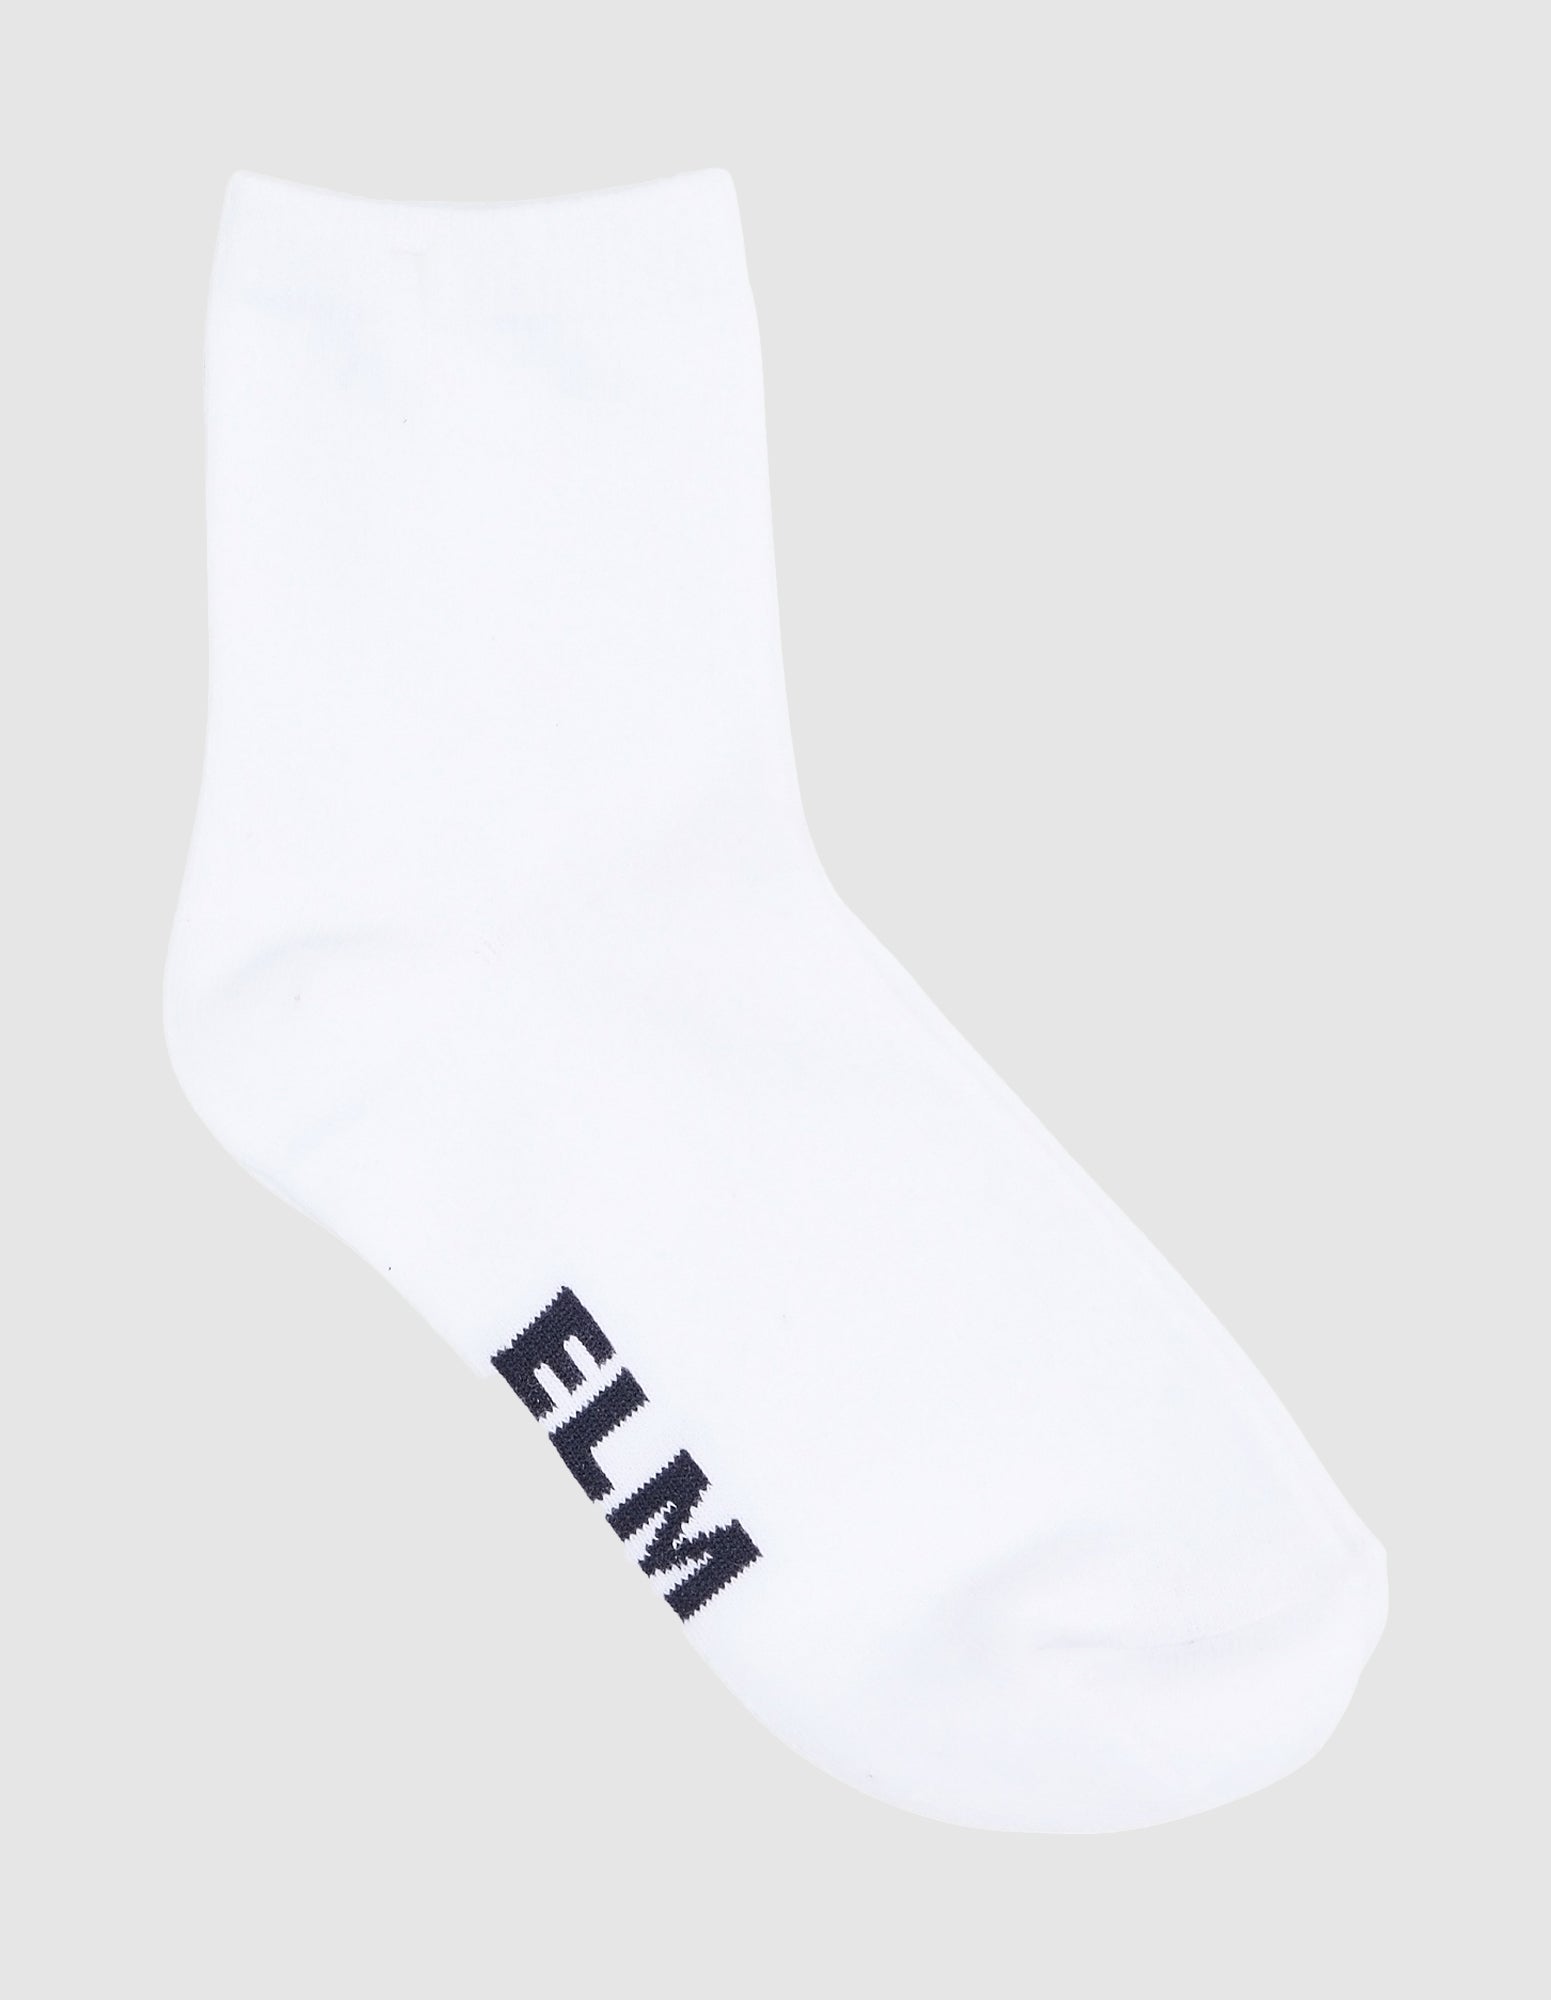 2 Pack Ankle Socks   Idyll Navy Floral & White